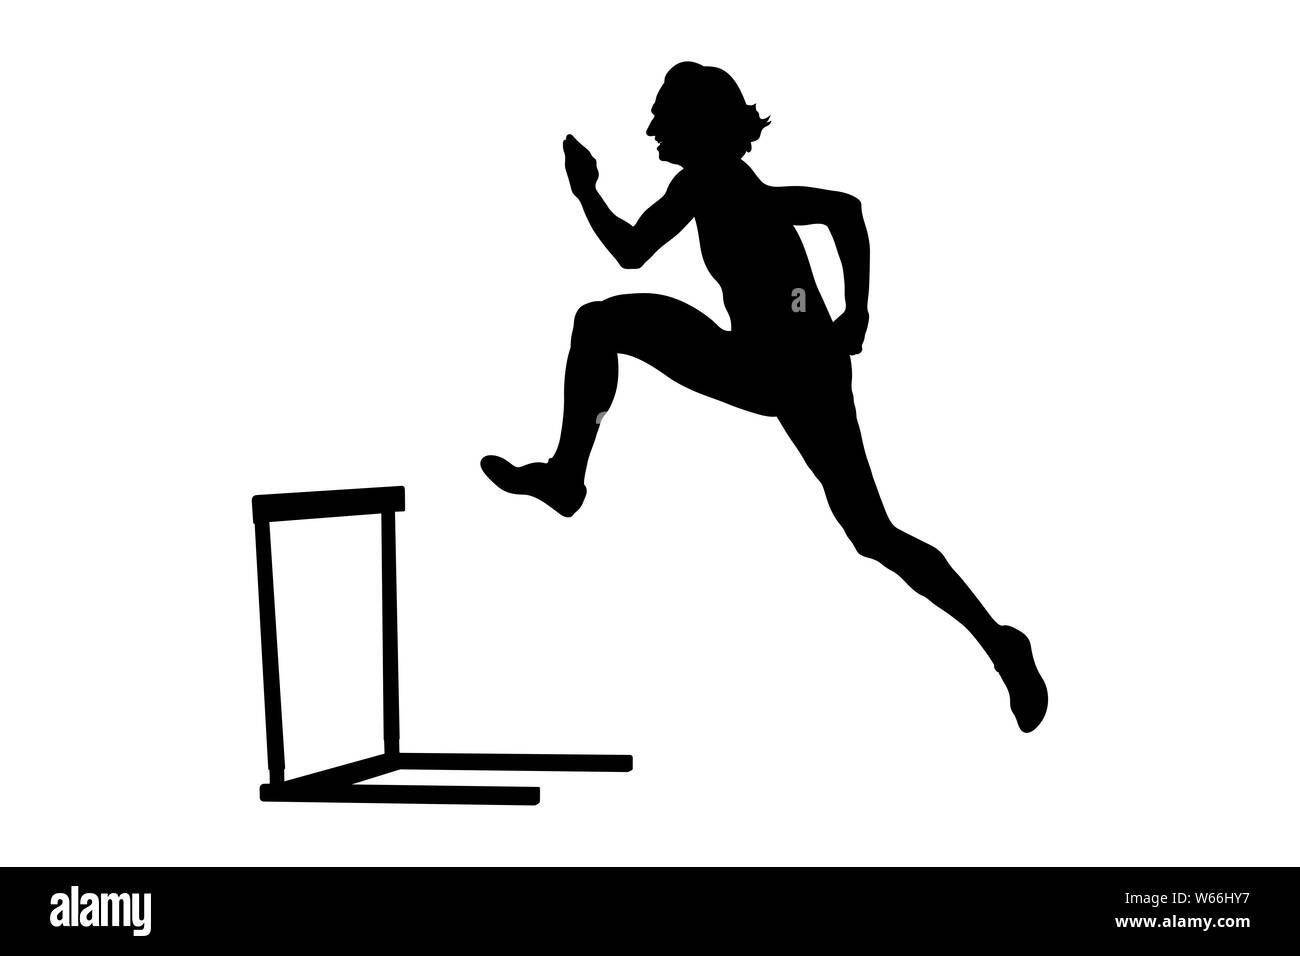 women athlete running 400 meter hurdles black silhouette Stock Photo